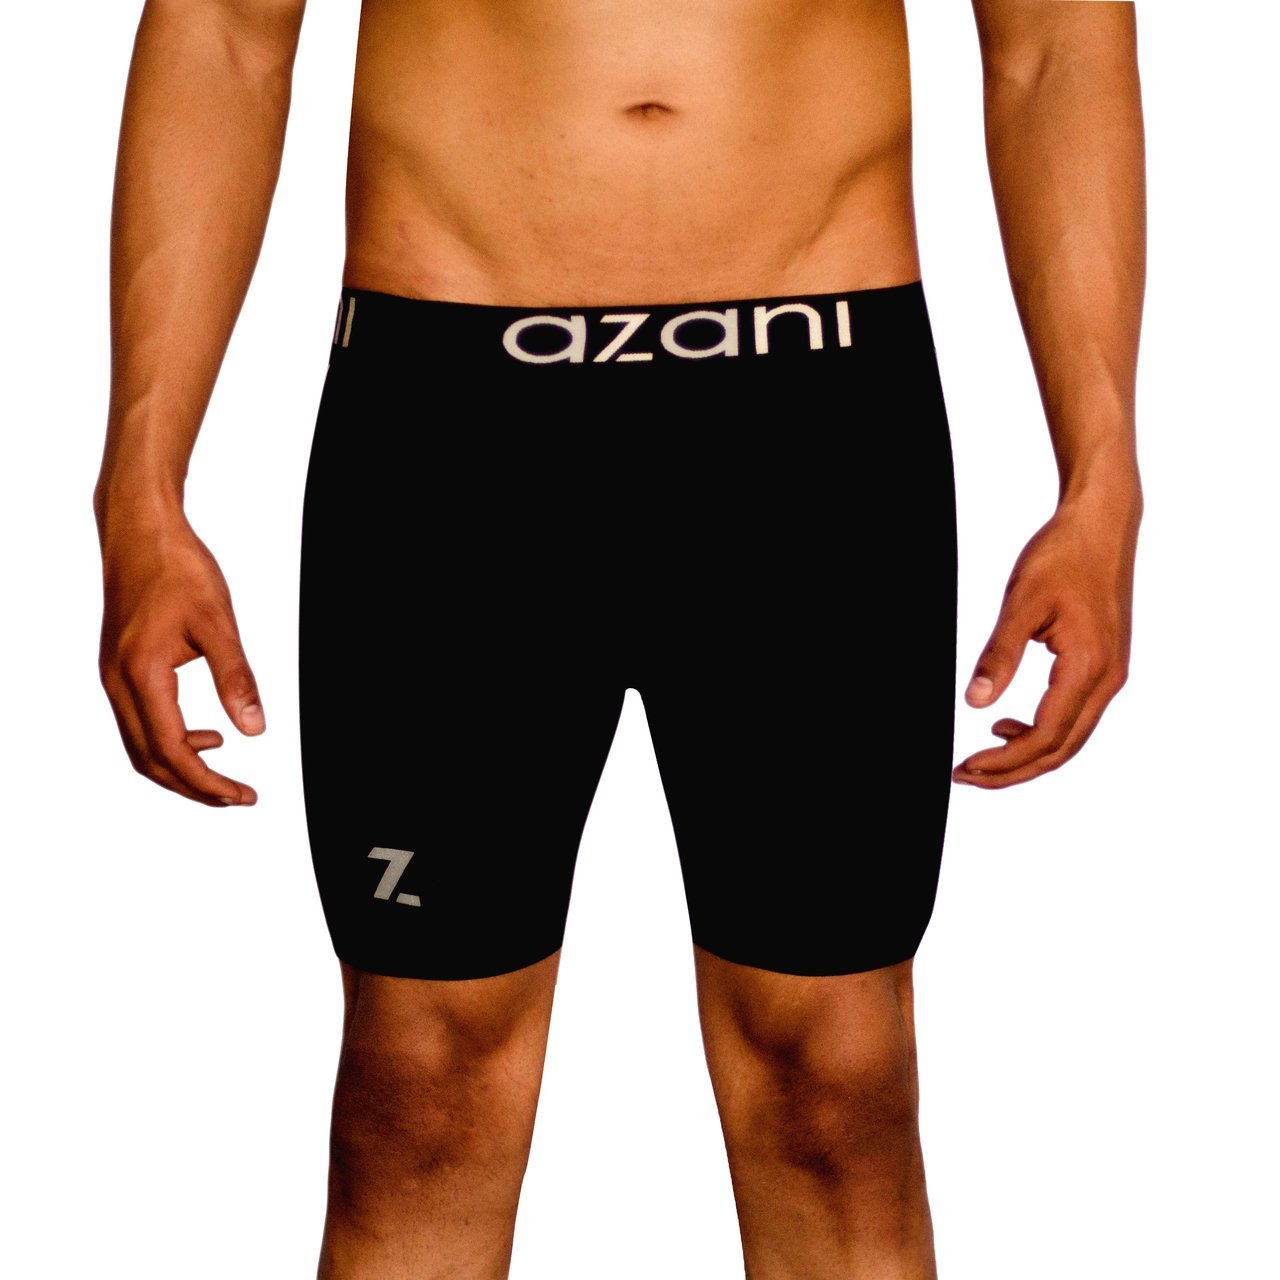 Azani Original Series Compression Performance Underwear - Black